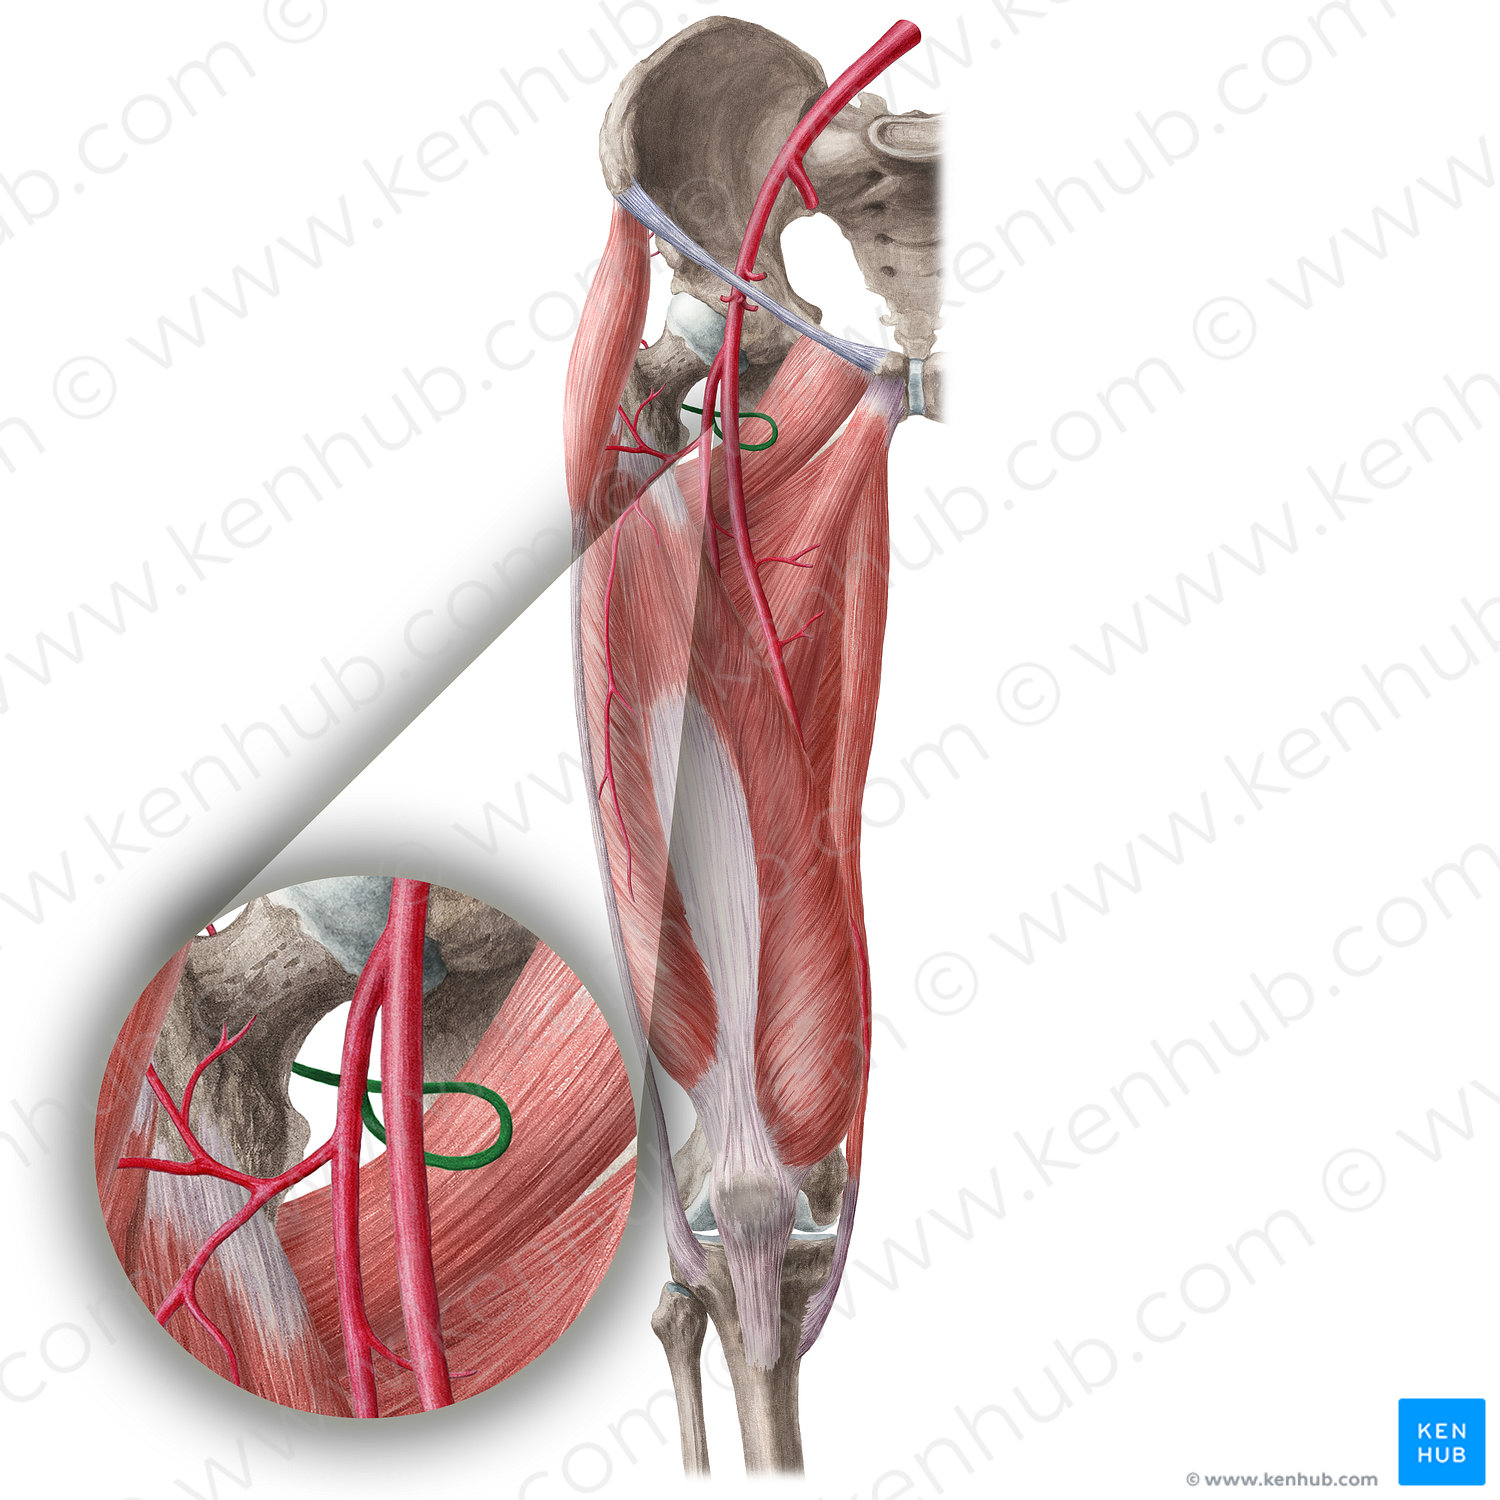 Medial circumflex femoral artery (#1035)